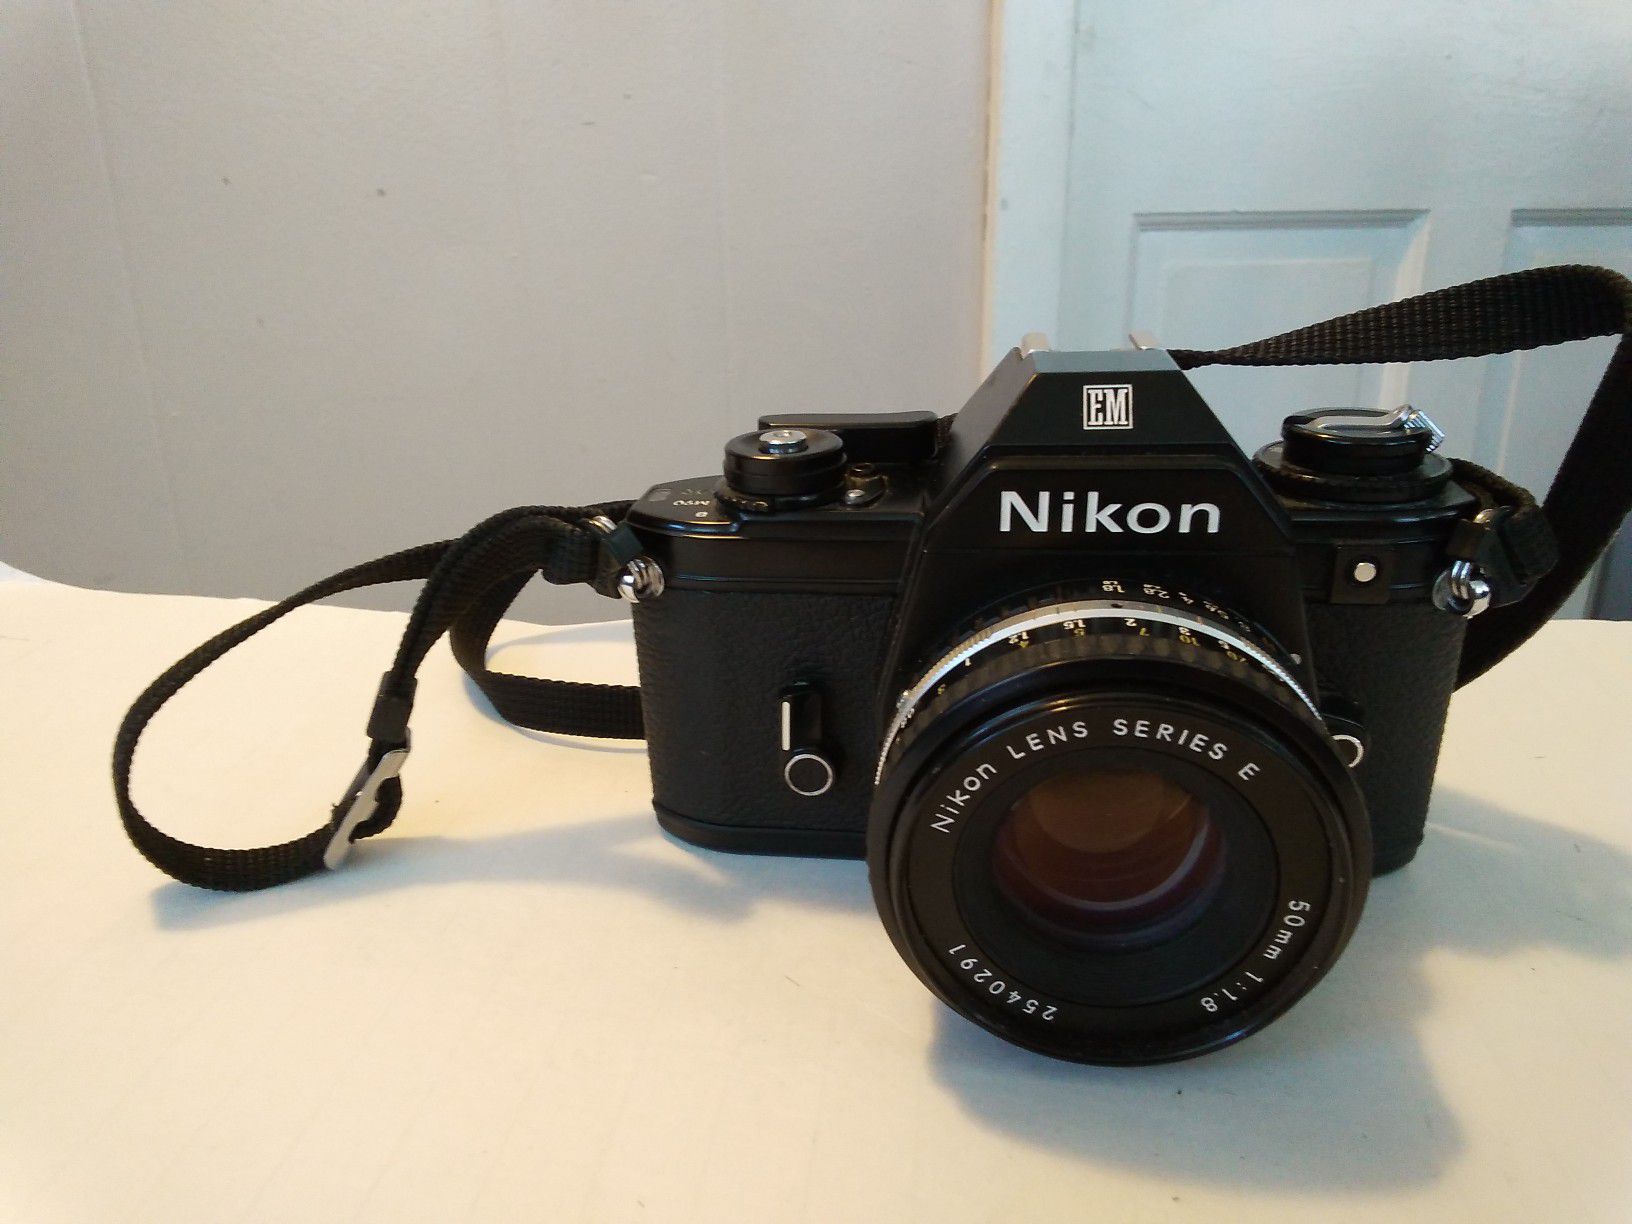 Nikon EM 35mm Film Camera with Nikon 50mm f/1.8 Lens